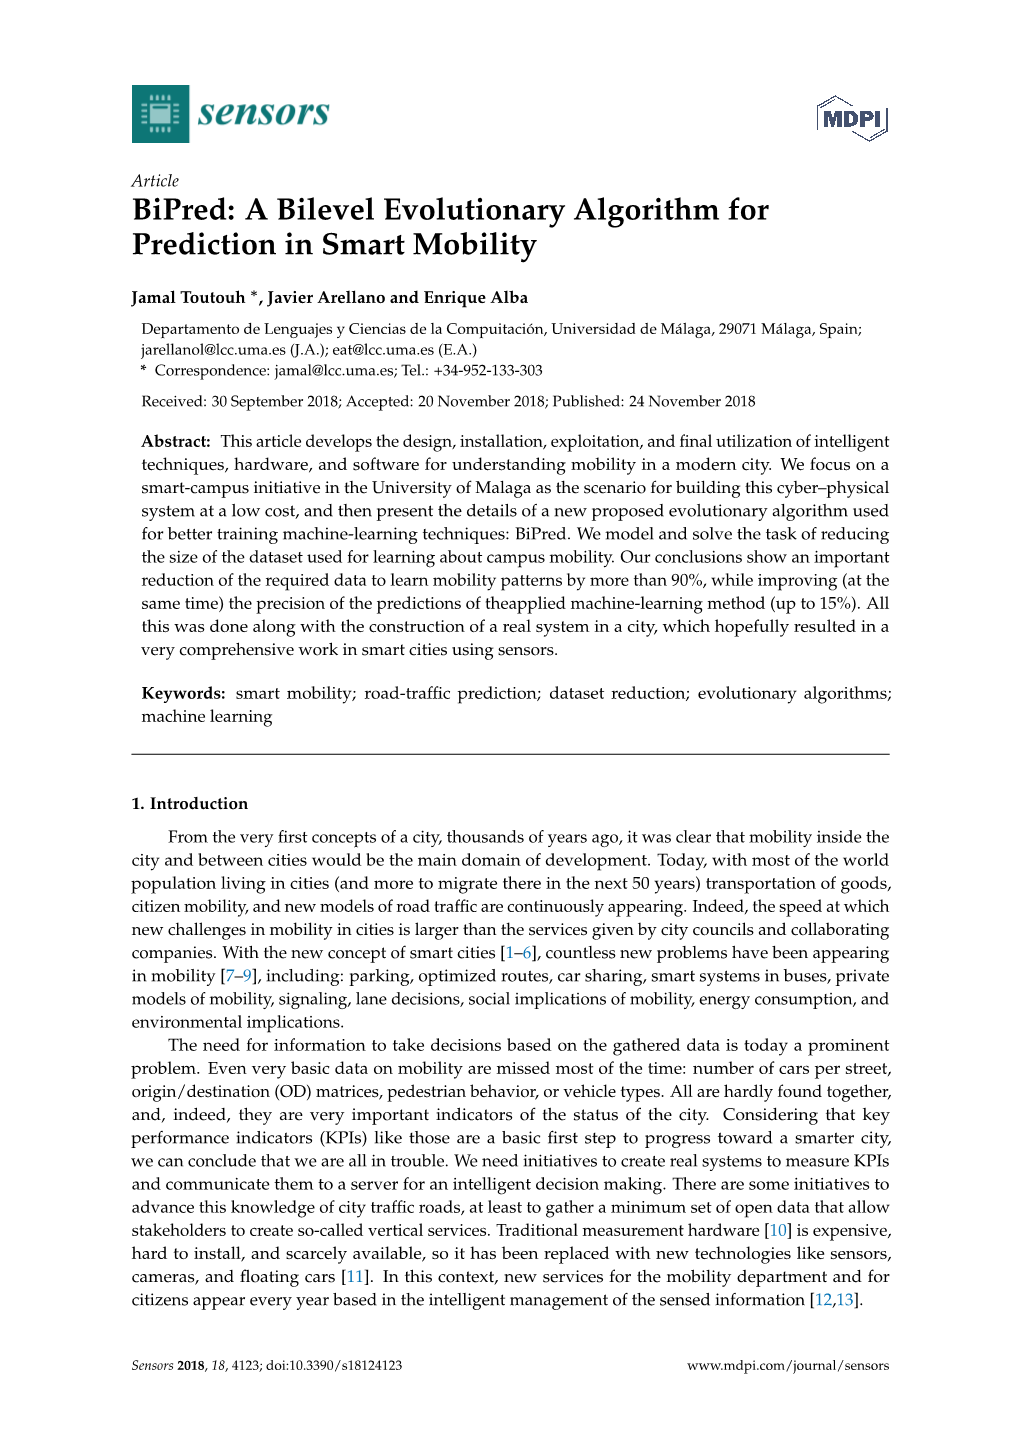 A Bilevel Evolutionary Algorithm for Prediction in Smart Mobility